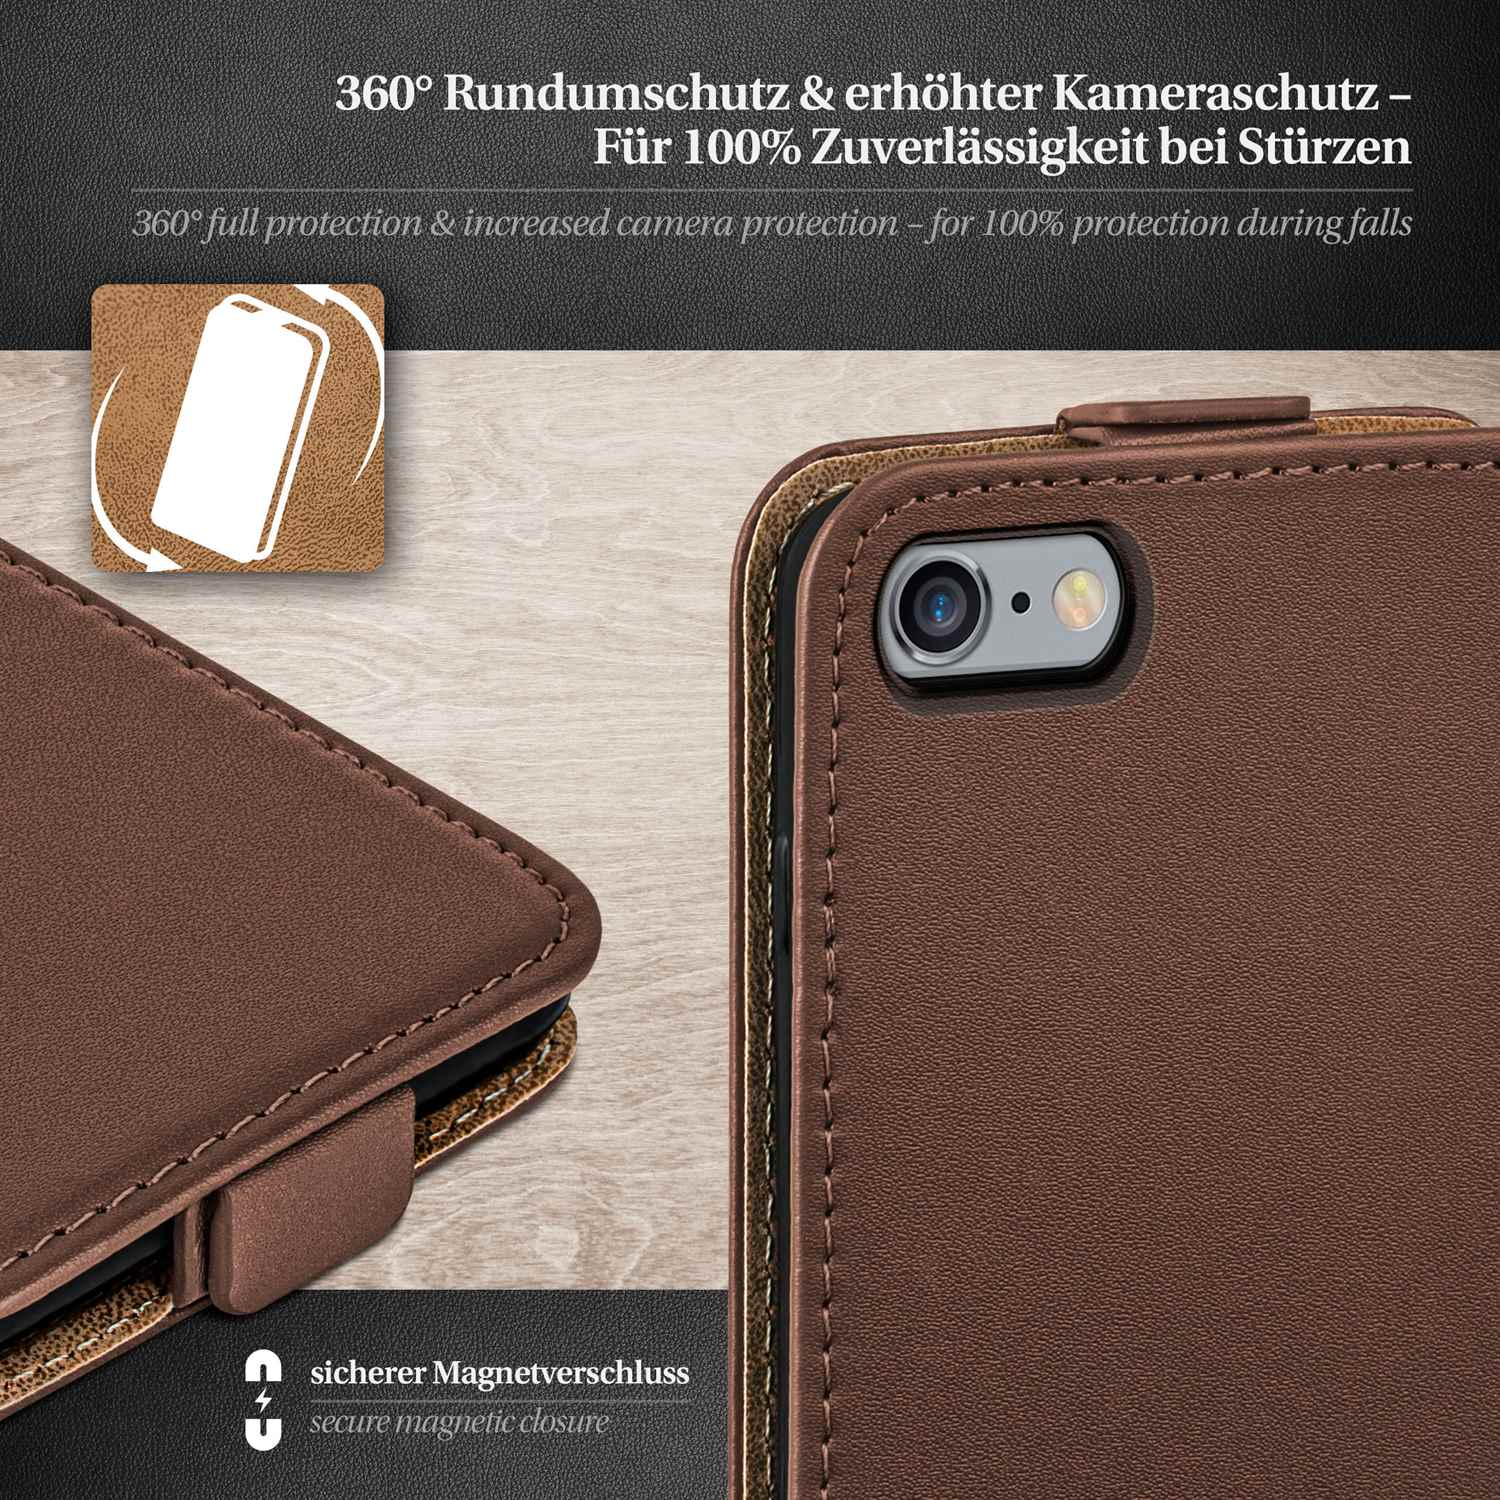 MOEX Flip Case, 6s Oxide-Brown Cover, Apple, iPhone Plus, Flip